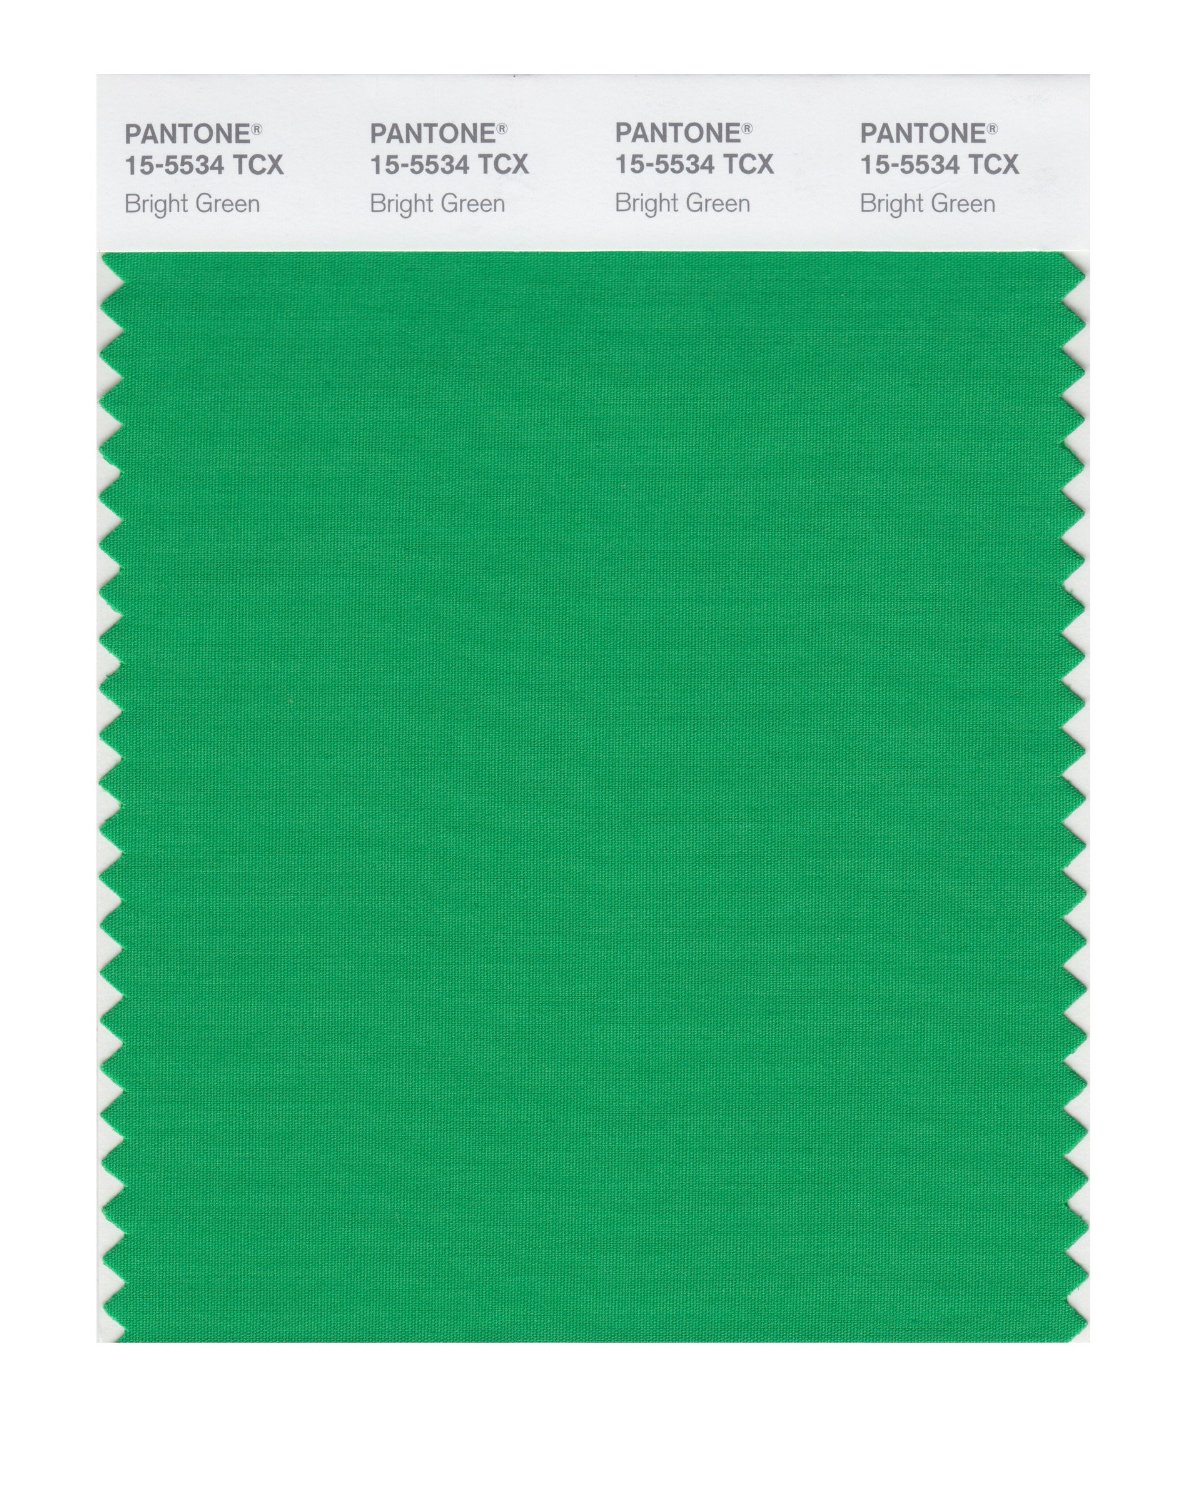 Pantone Cotton Swatch 15-5534 Bright Green